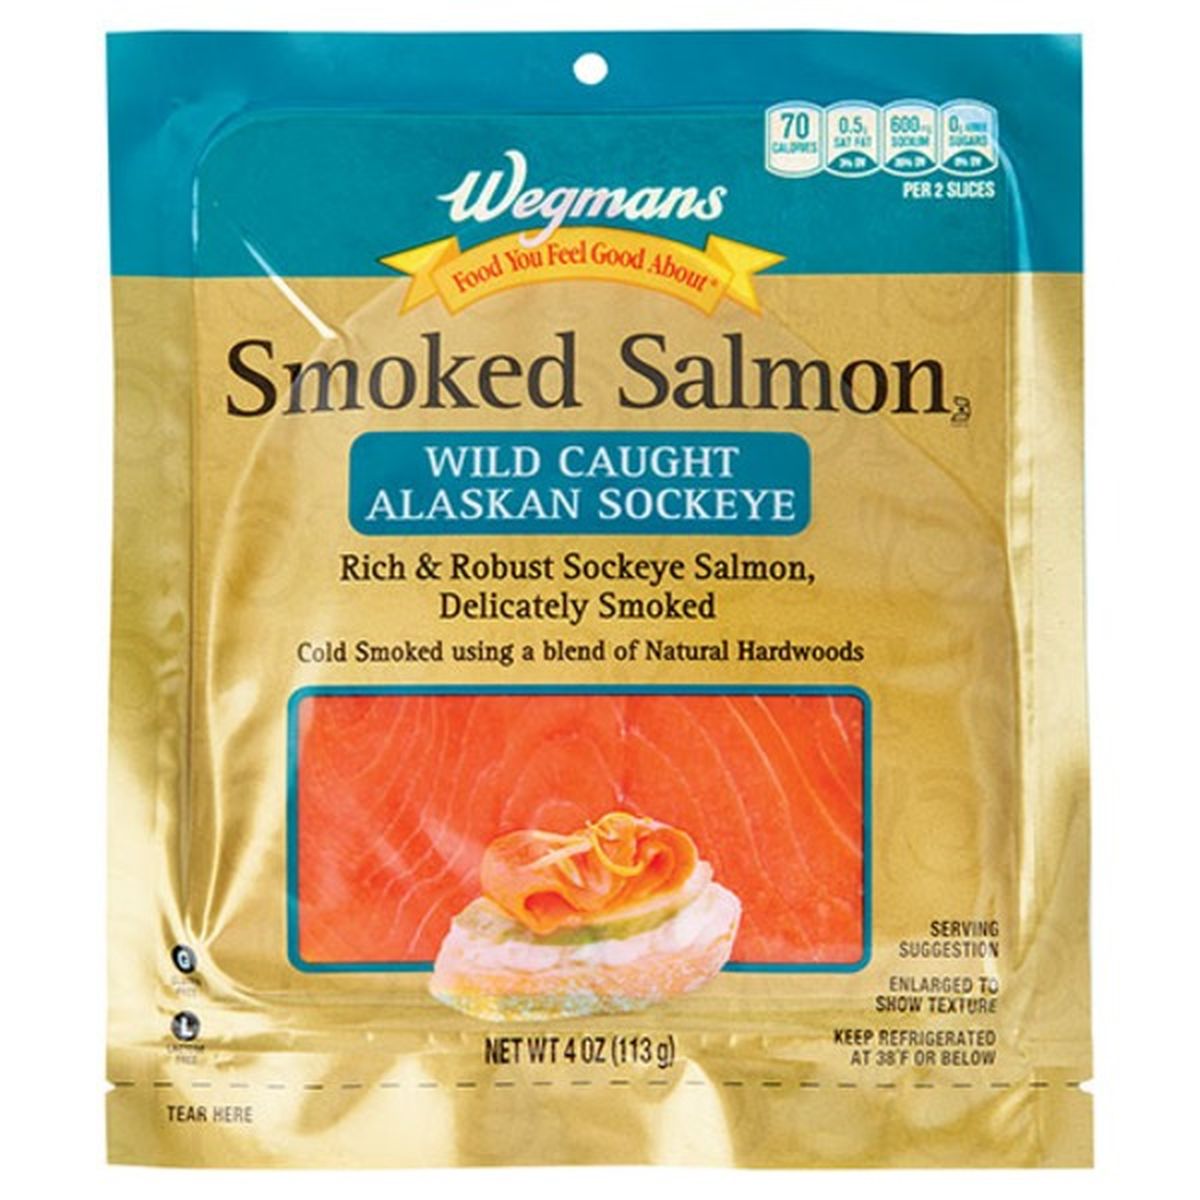 Calories in Wegmans Smoked Alaskan Sockeye Salmon